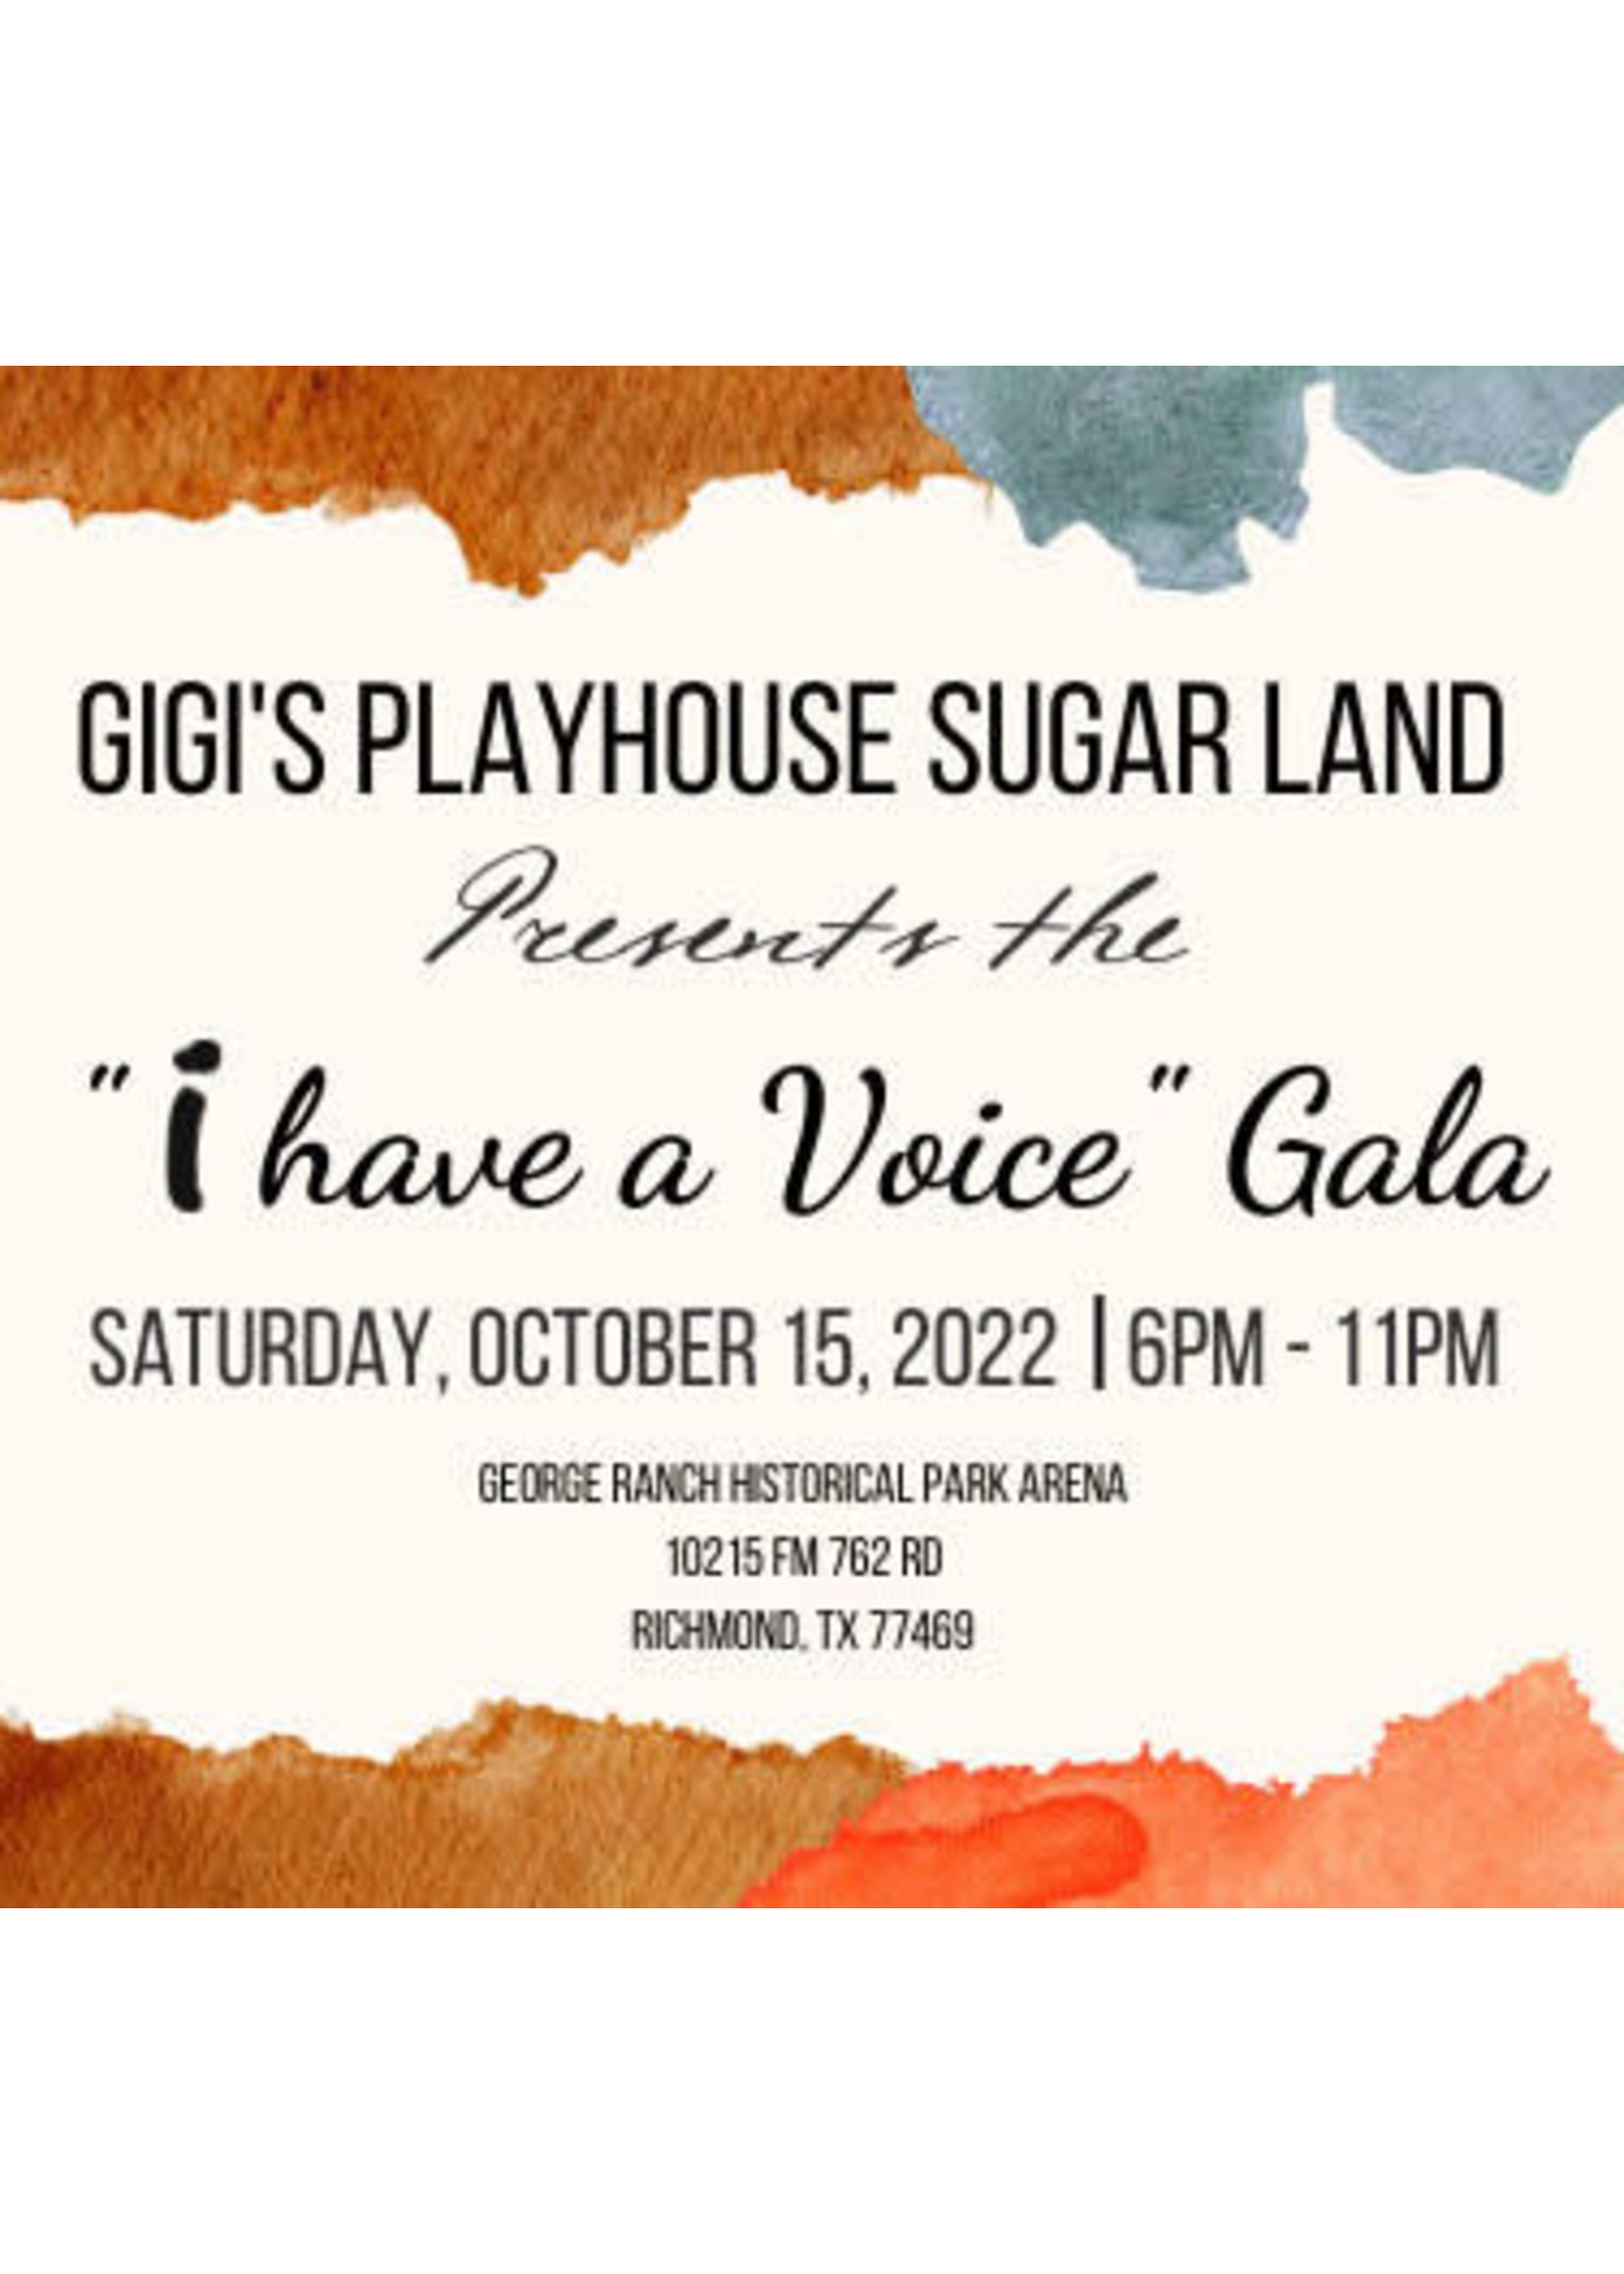 GiGis Playhouse Gala Cash Donation $75 (used to buy wine for Gala)